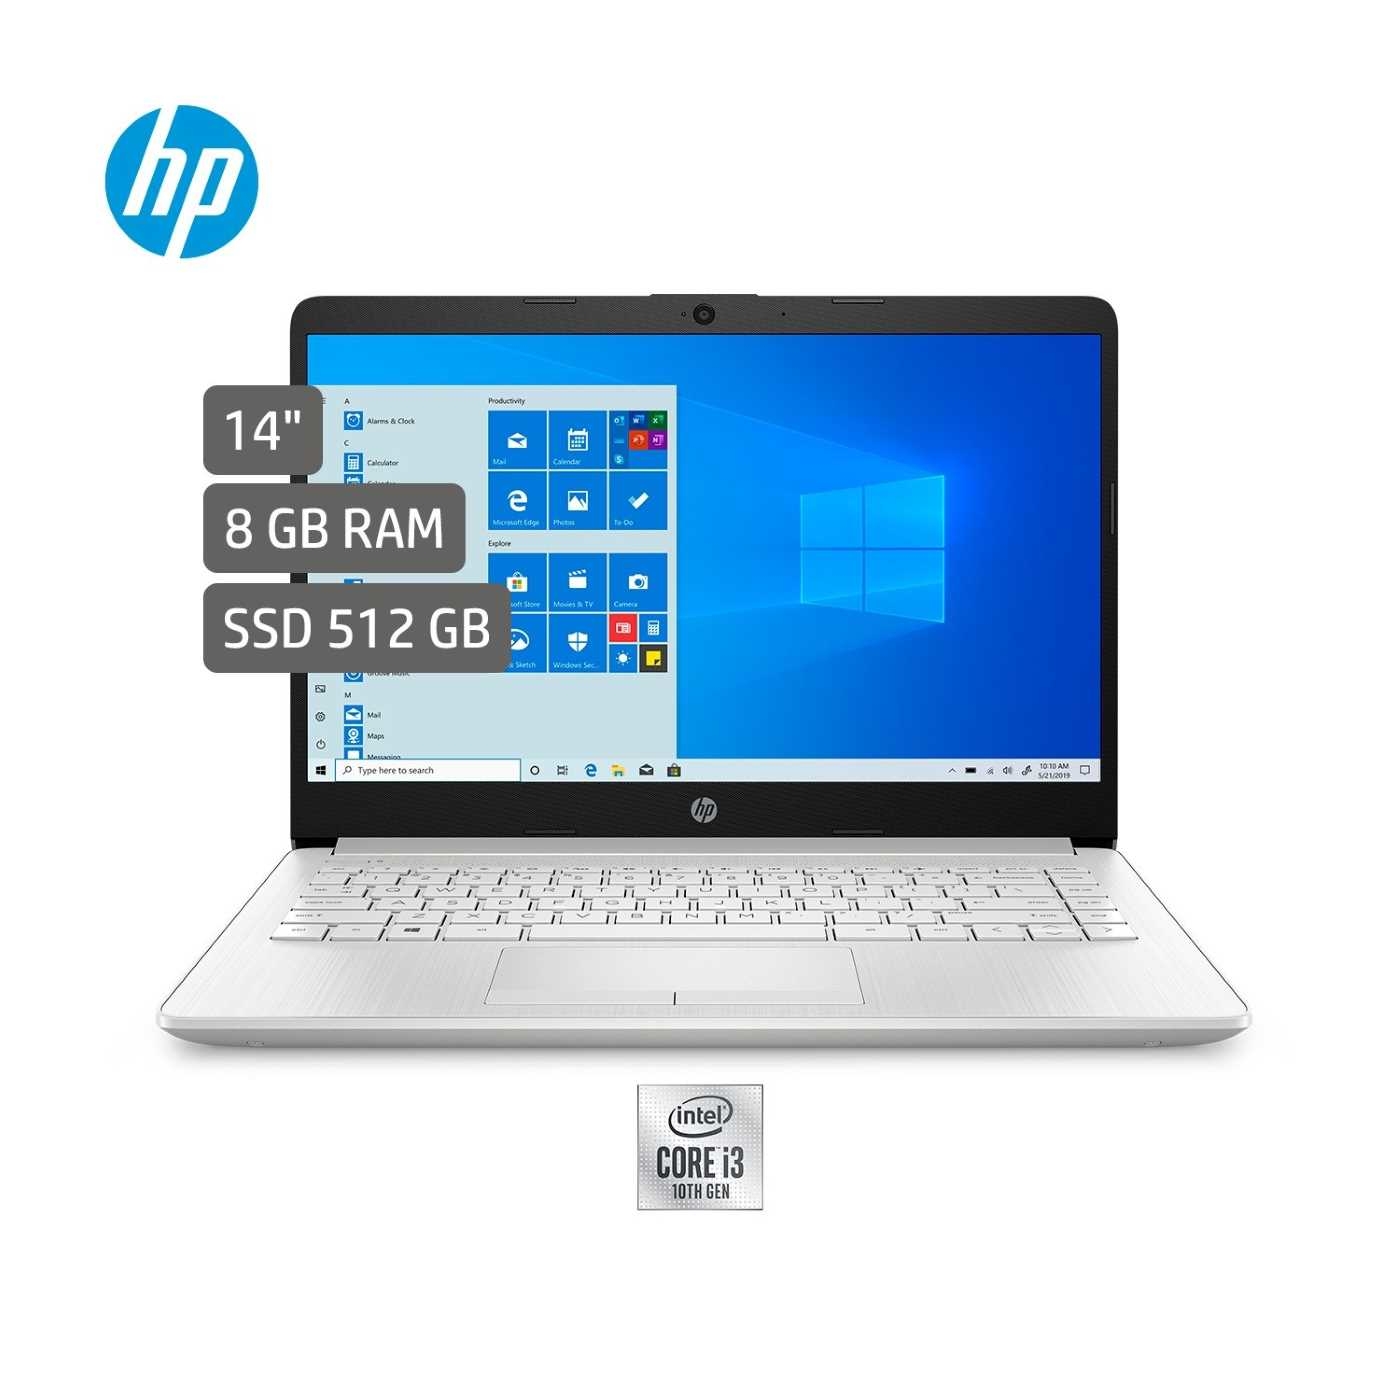 Computador Portátil HP 14" Pulgadas cf2066la - Intel Core i3 - RAM 8GB - Disco SSD 512 GB - Plata